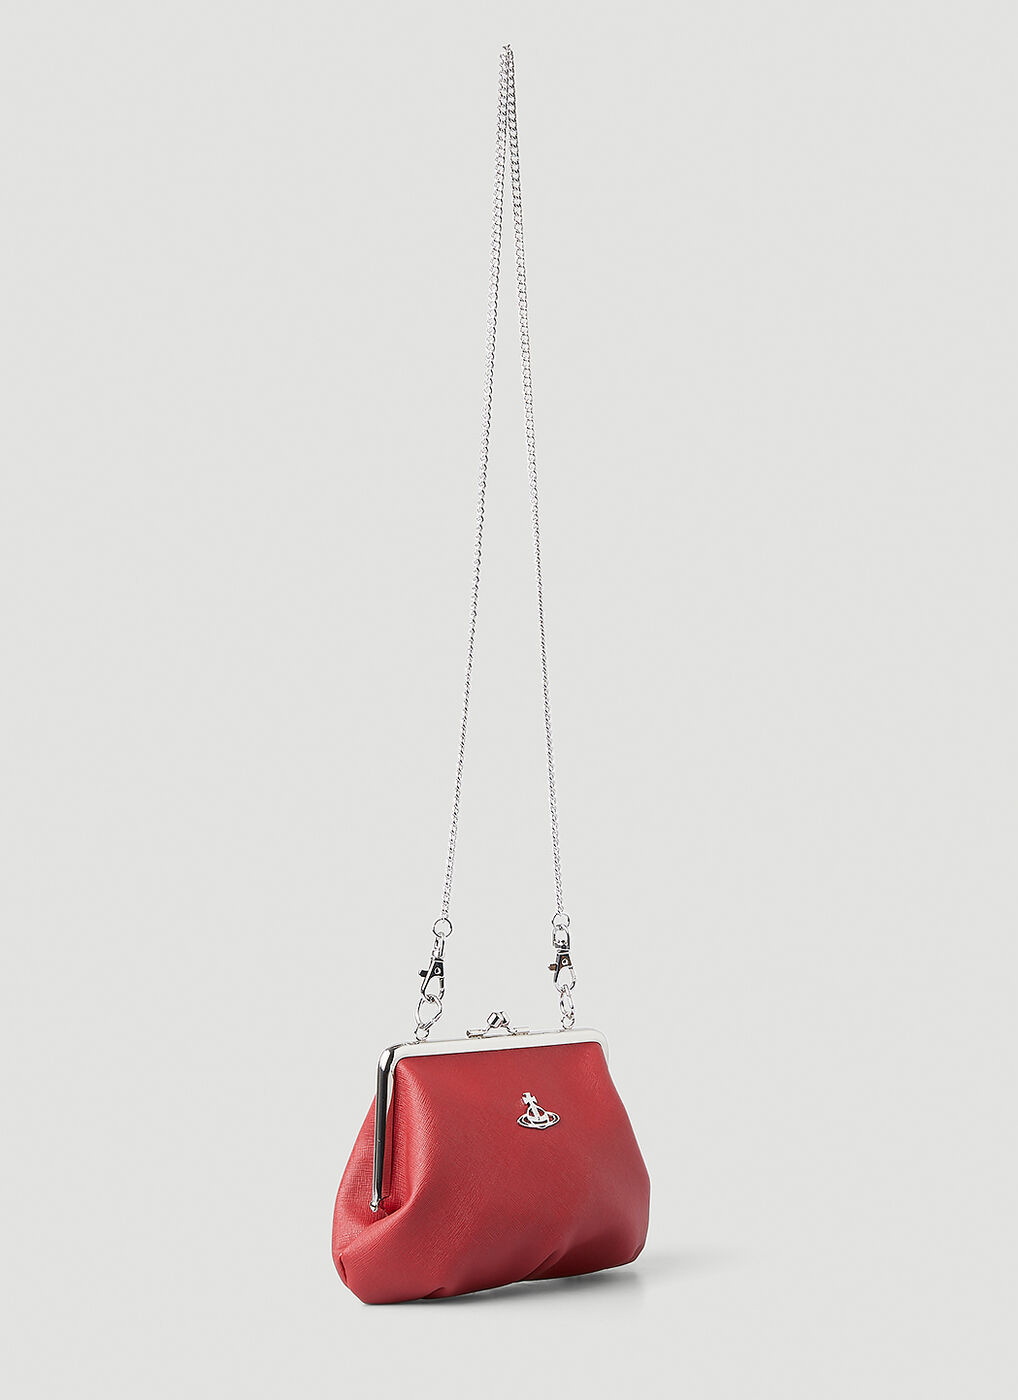 Vivienne Westwood Gamaguchi Trifold Wallet Color Red orb | eBay